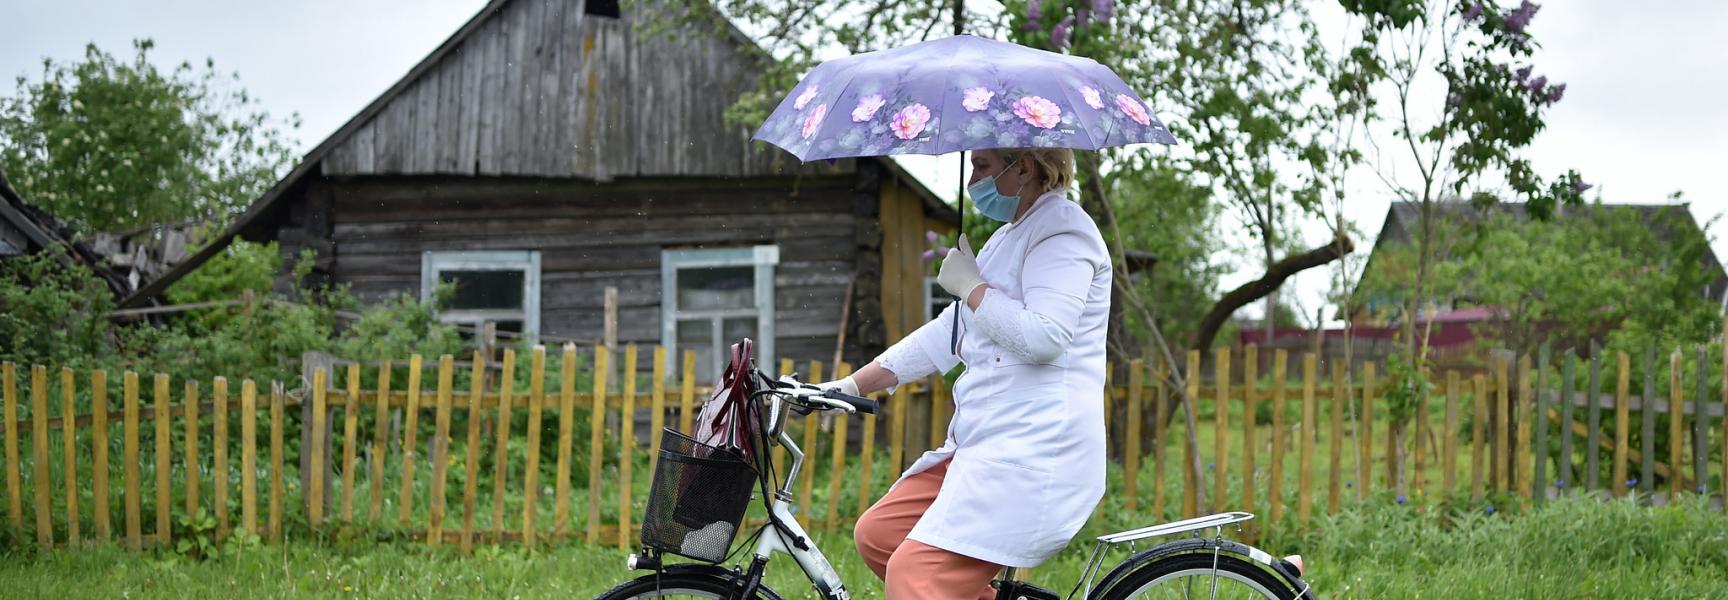 Village medic on wheels in Belarus